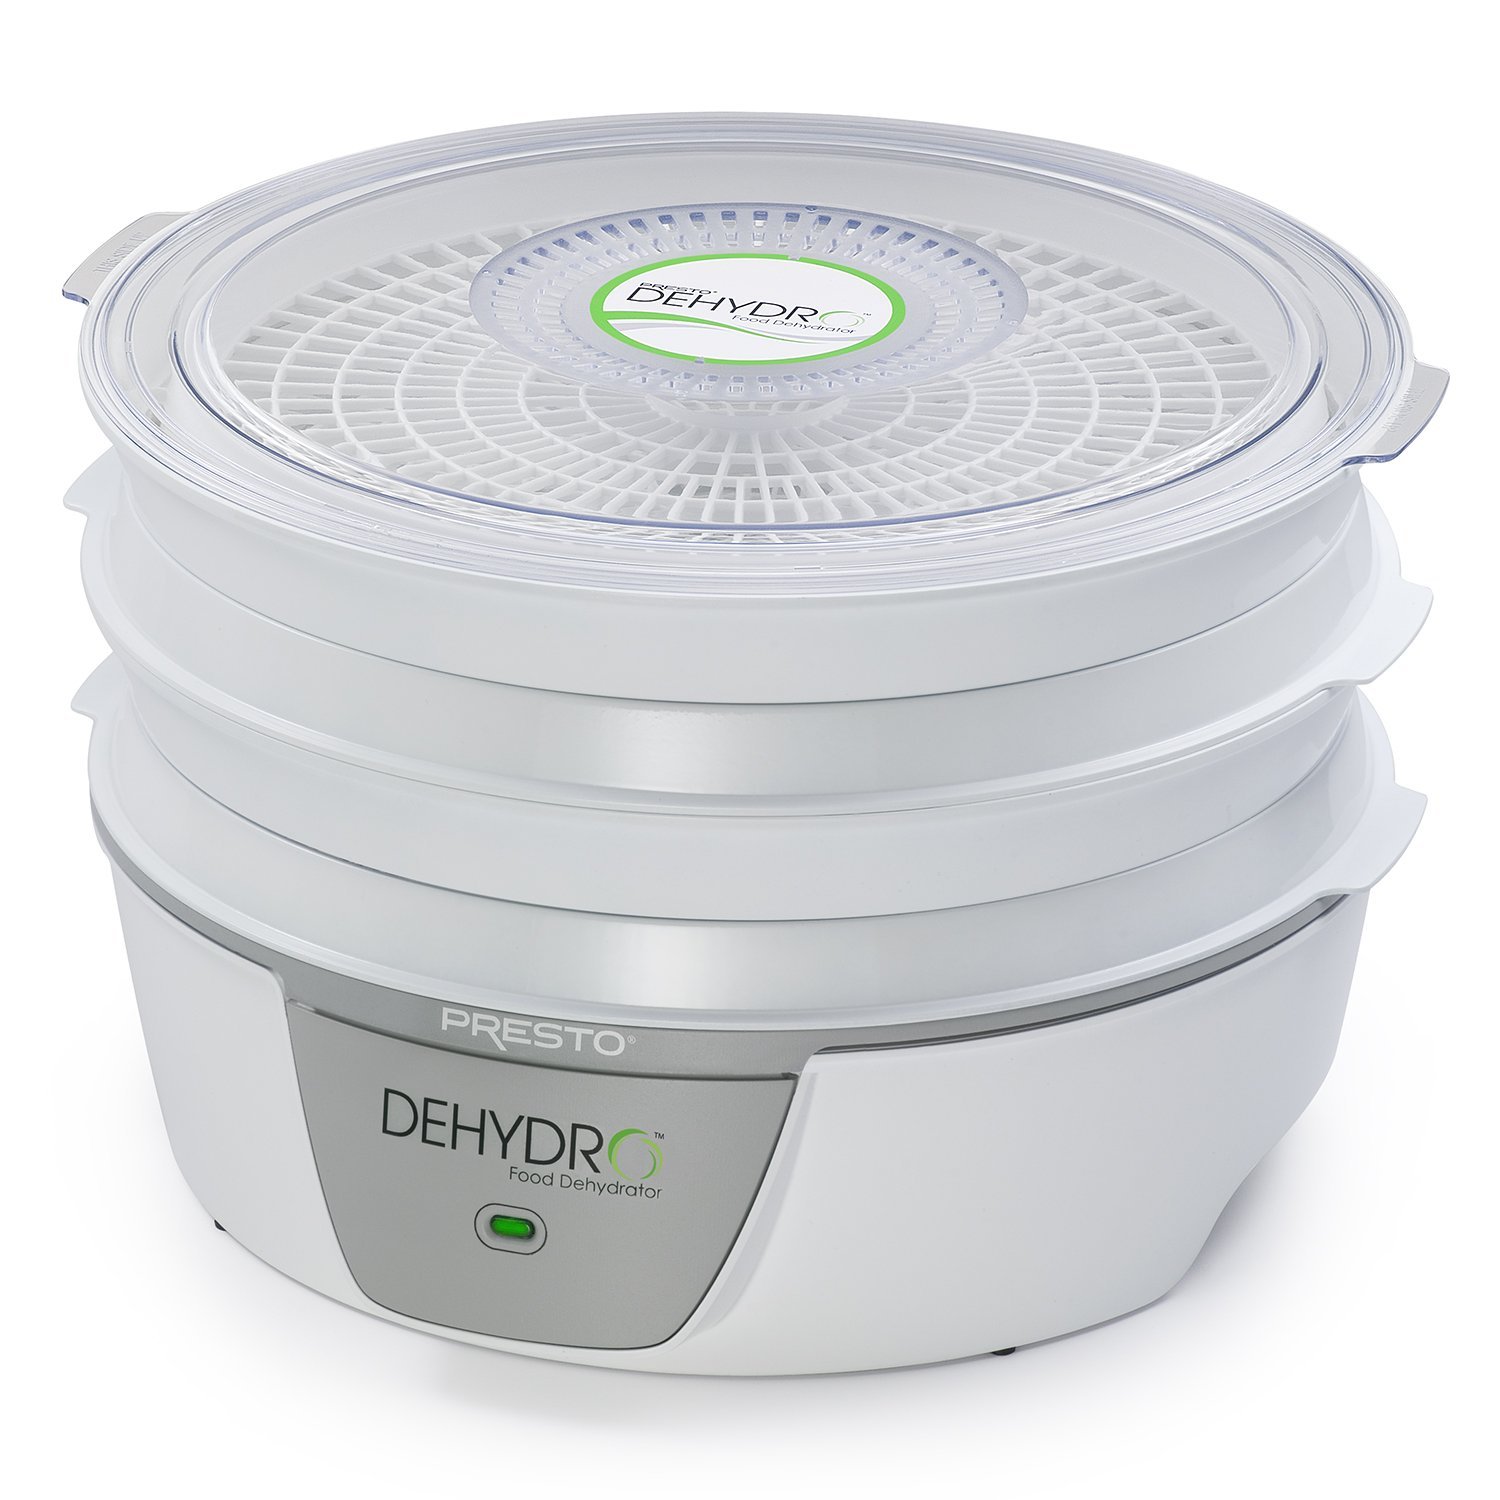 Presto Dehydro Electric Food Dehydrator – Just $36.50!